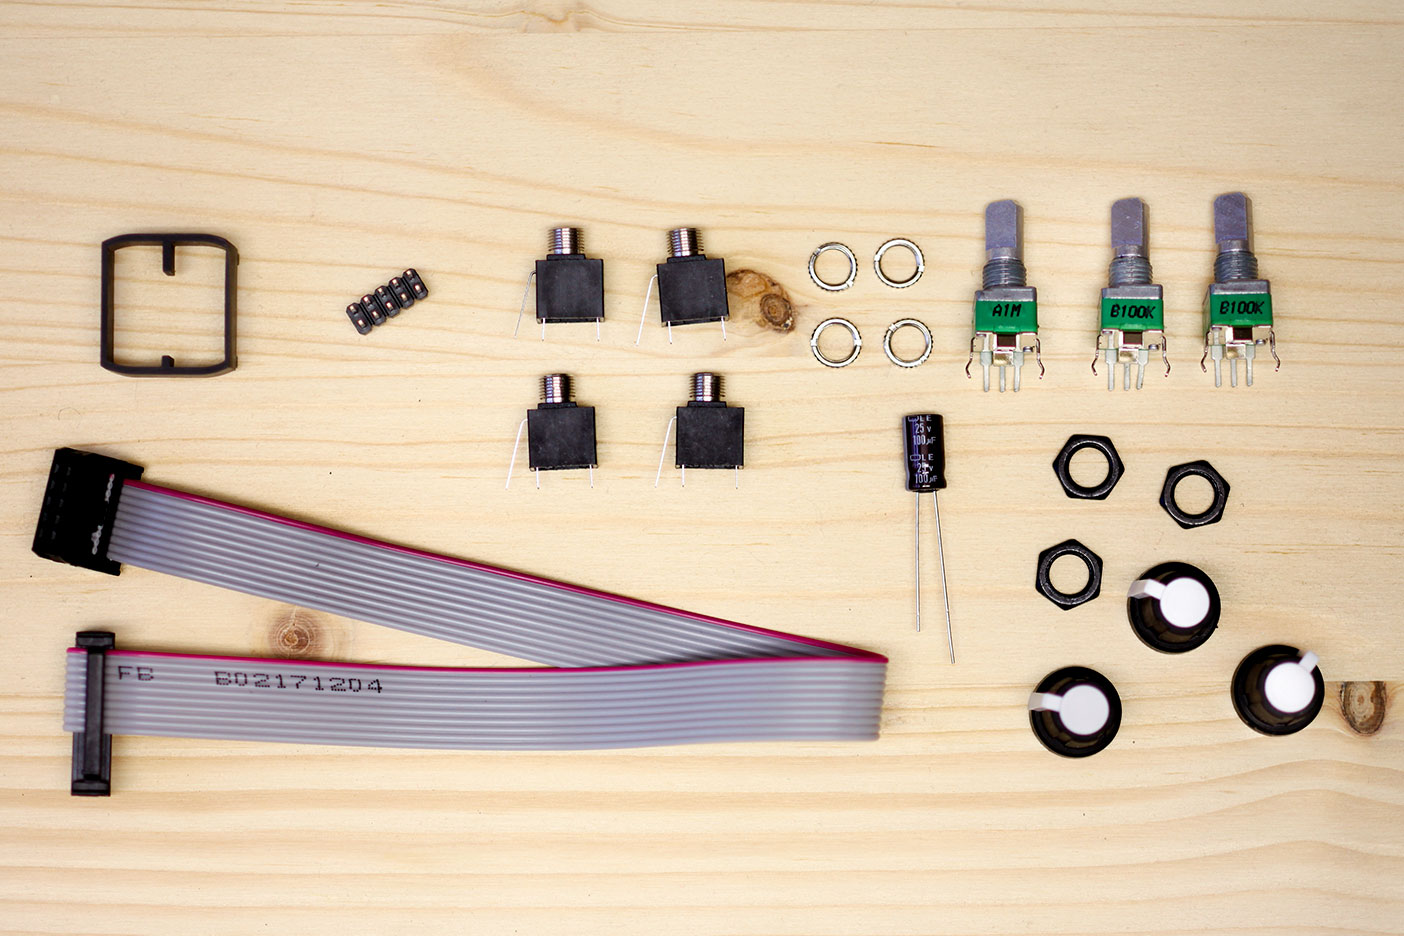 Farbfilter DIY Kit – Build Guide